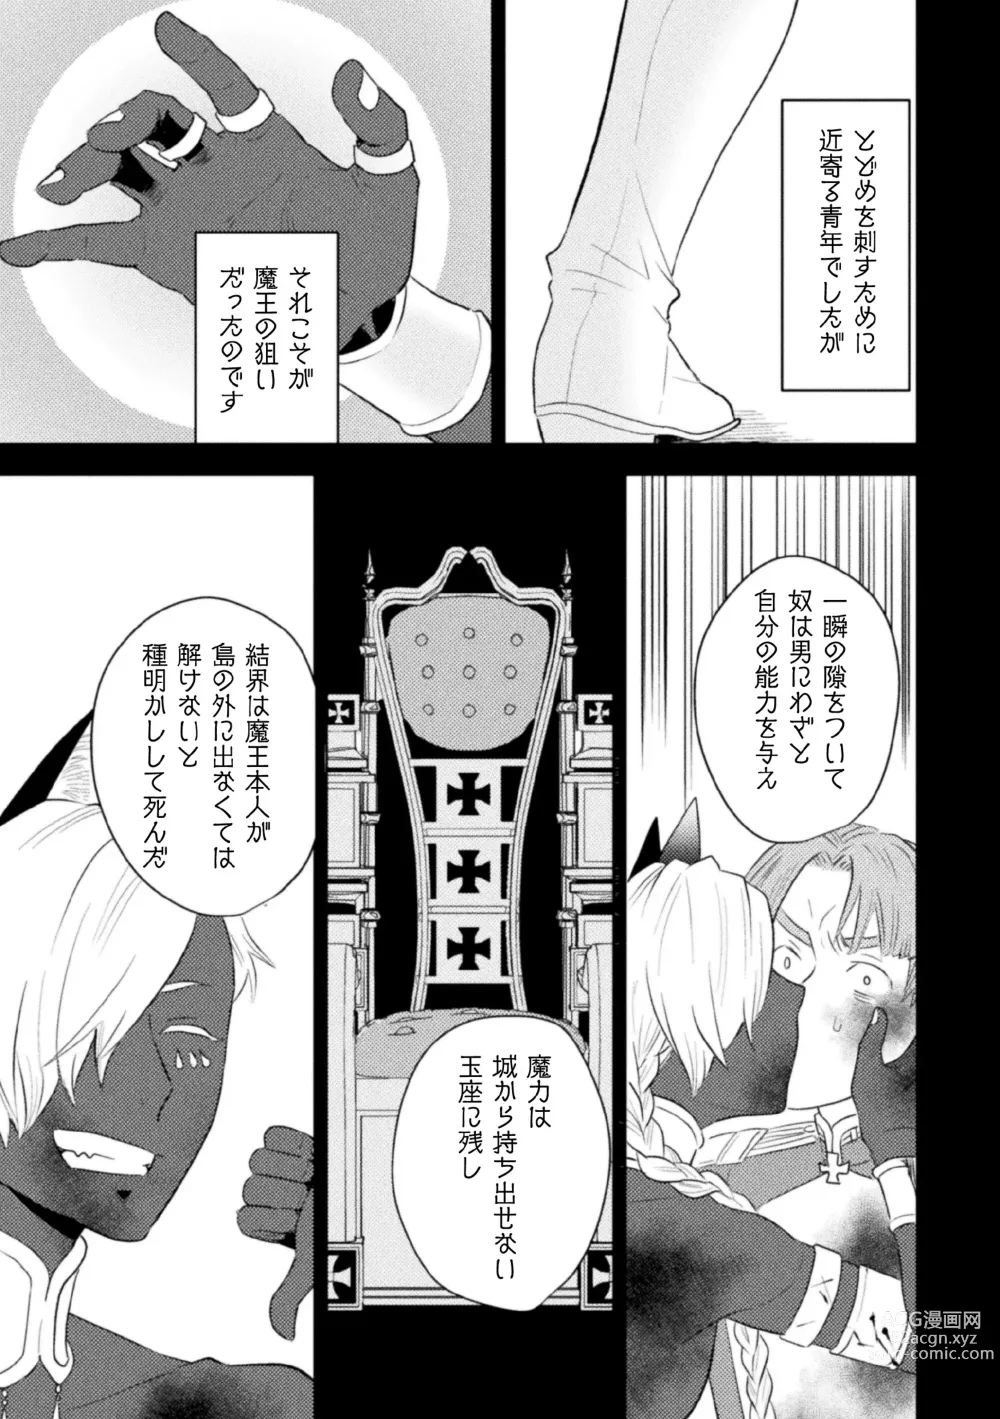 Page 11 of manga Zekkai Rougoku Kan Eien no Rougoku Kouhen